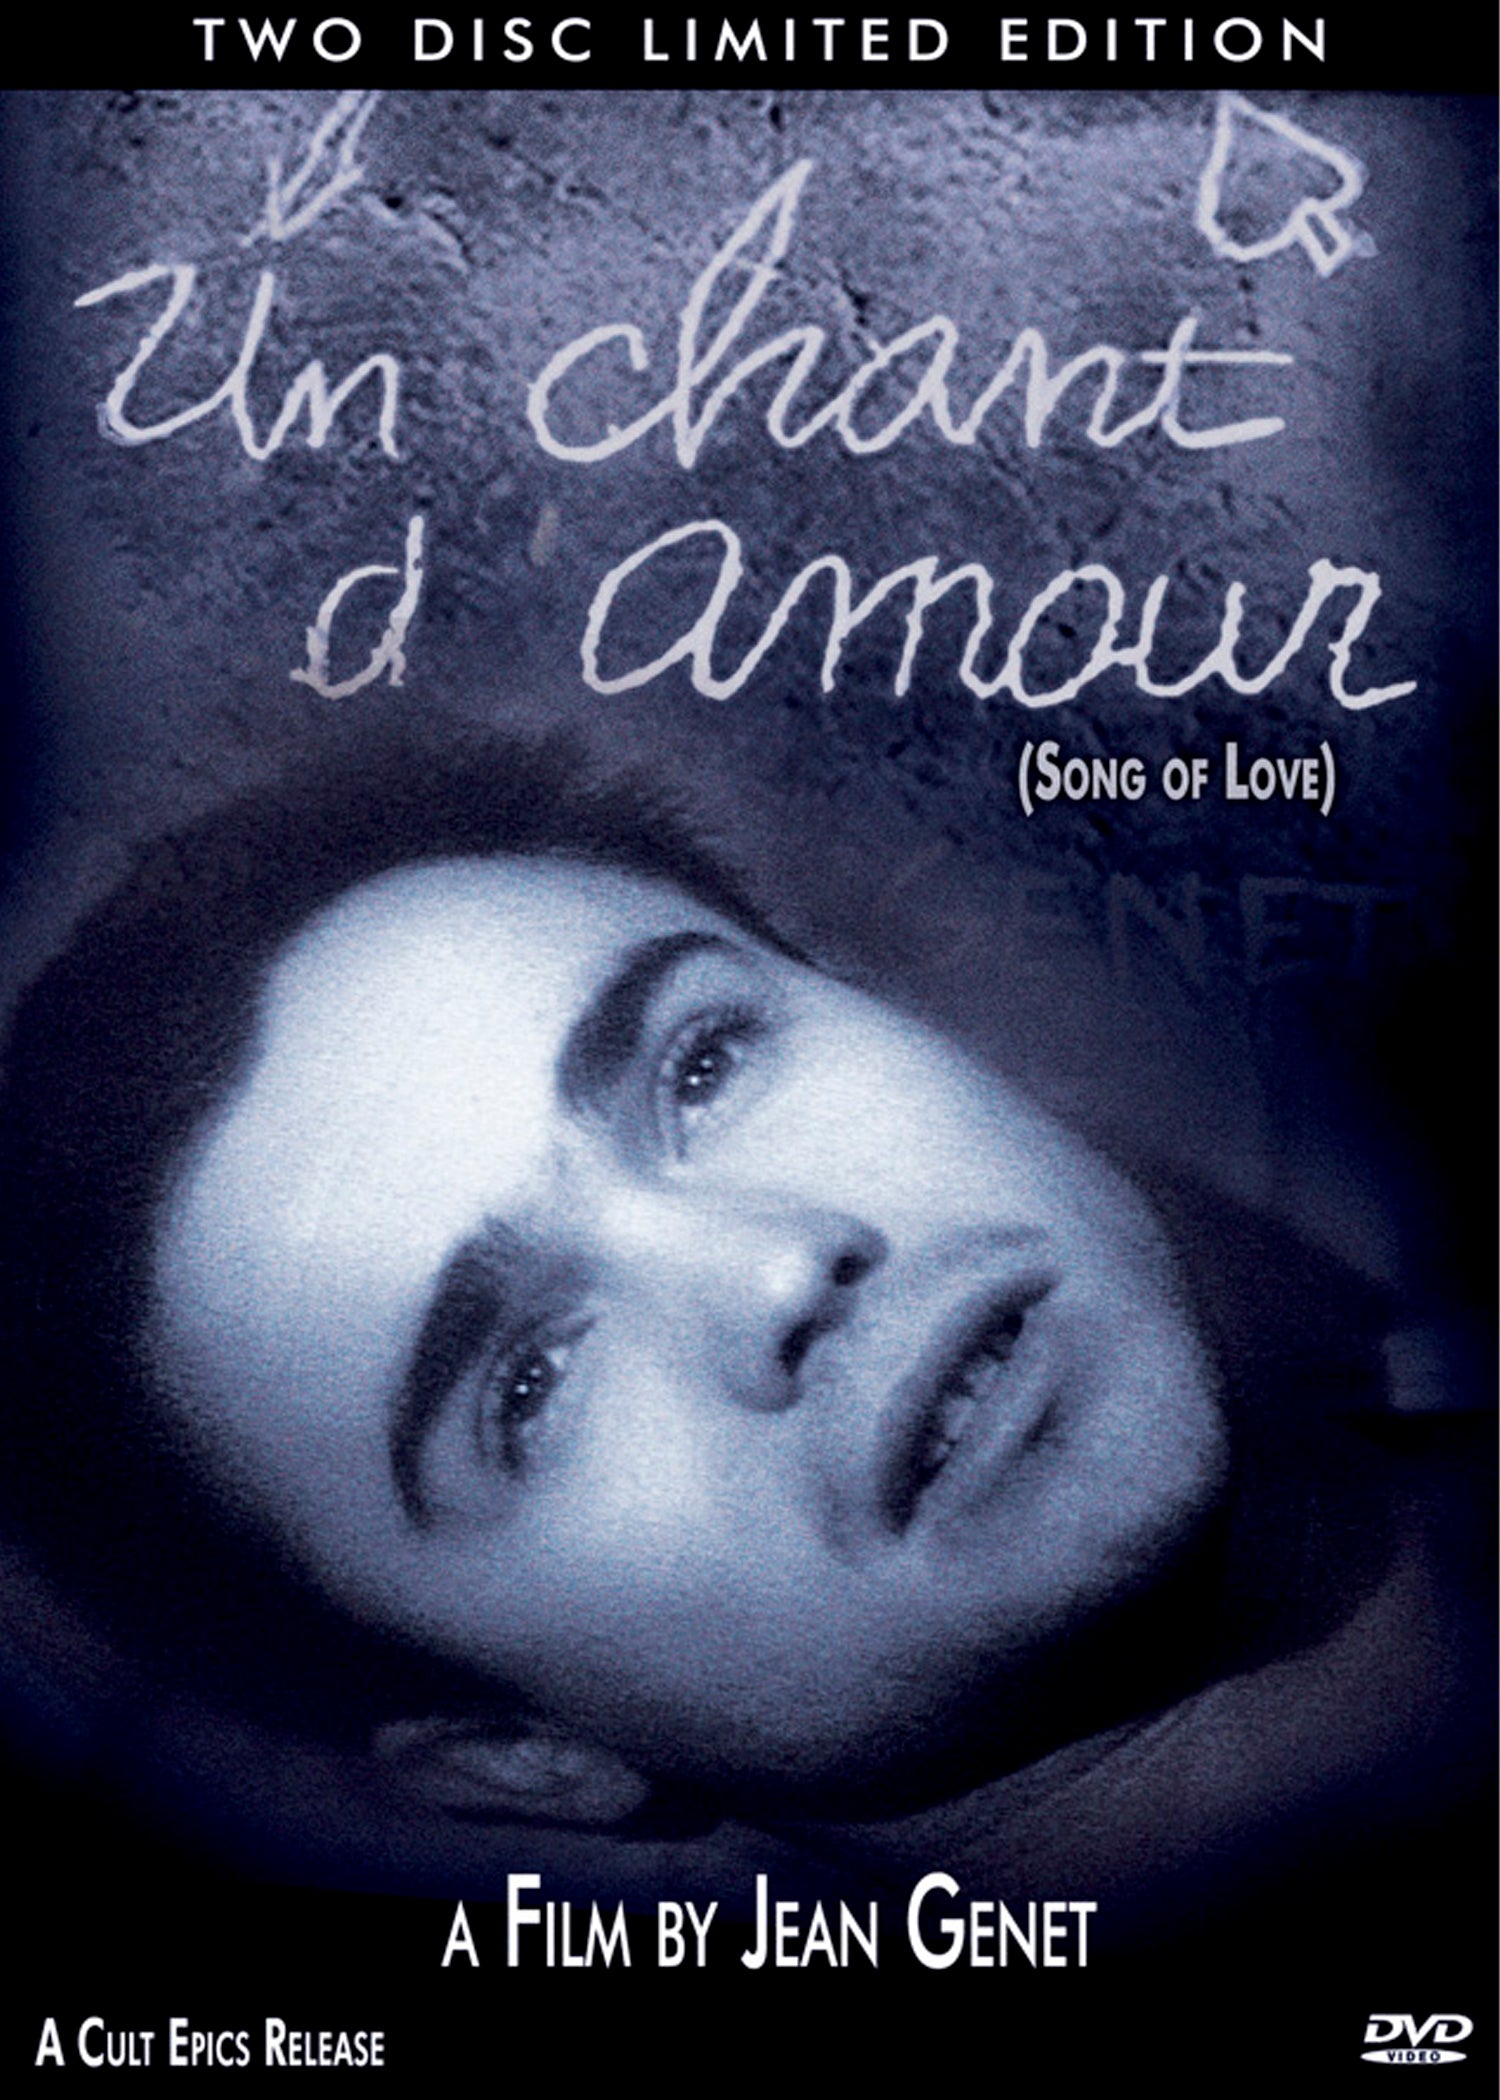 UN CHANT D'AMOUR (2-DISC LIMITED EDITION) DVD